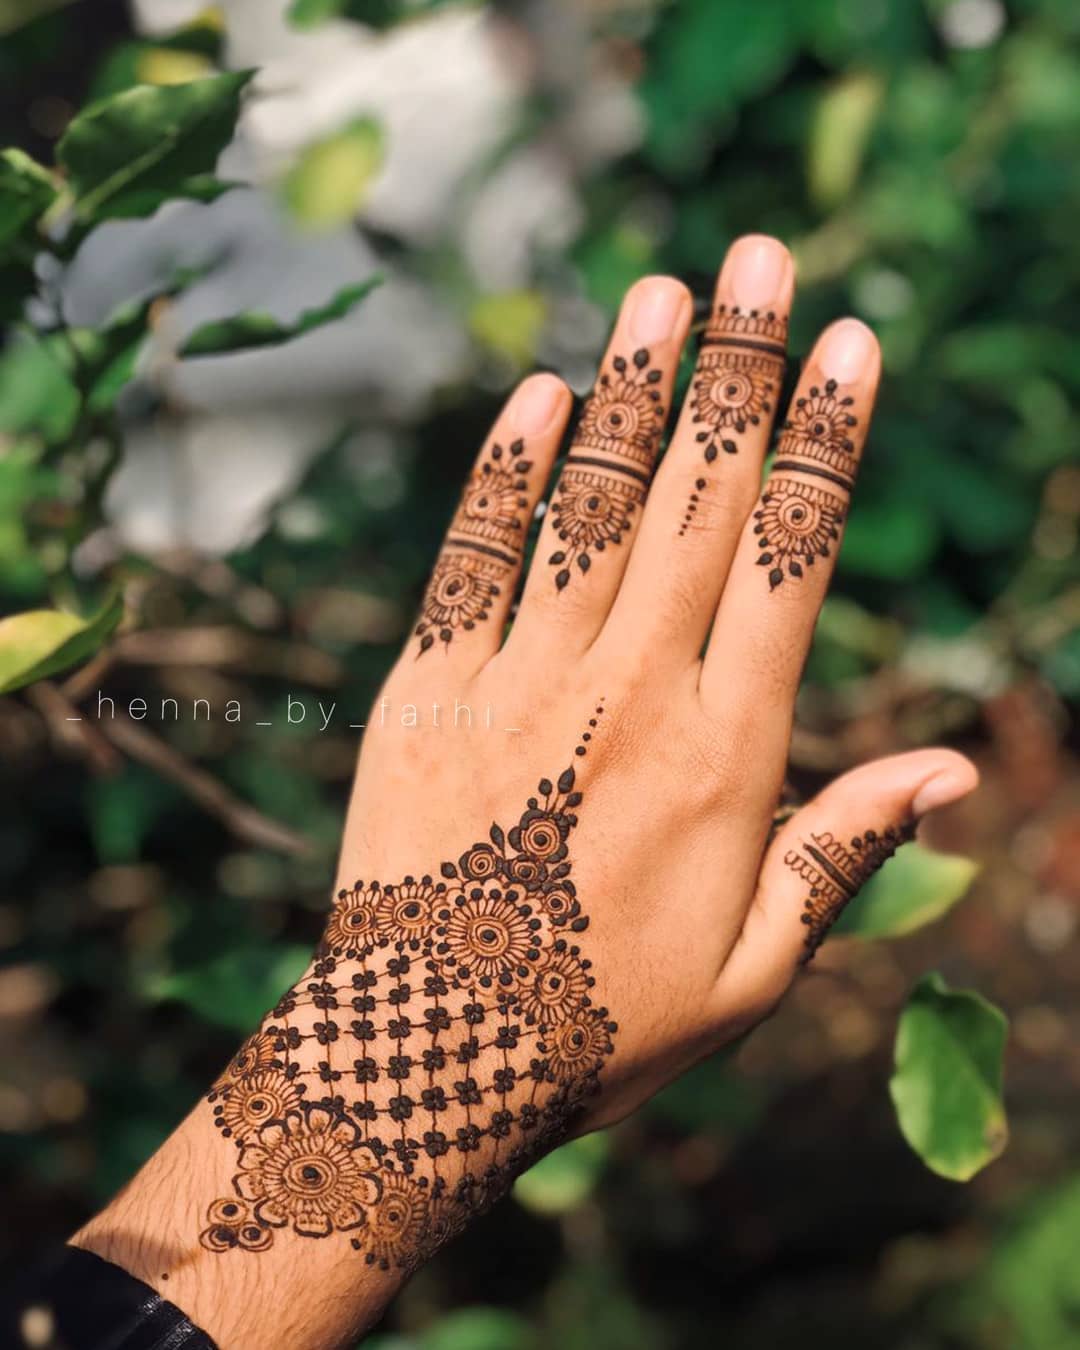 Mehndi Henna Tattoo  Free photo on Pixabay  Pixabay